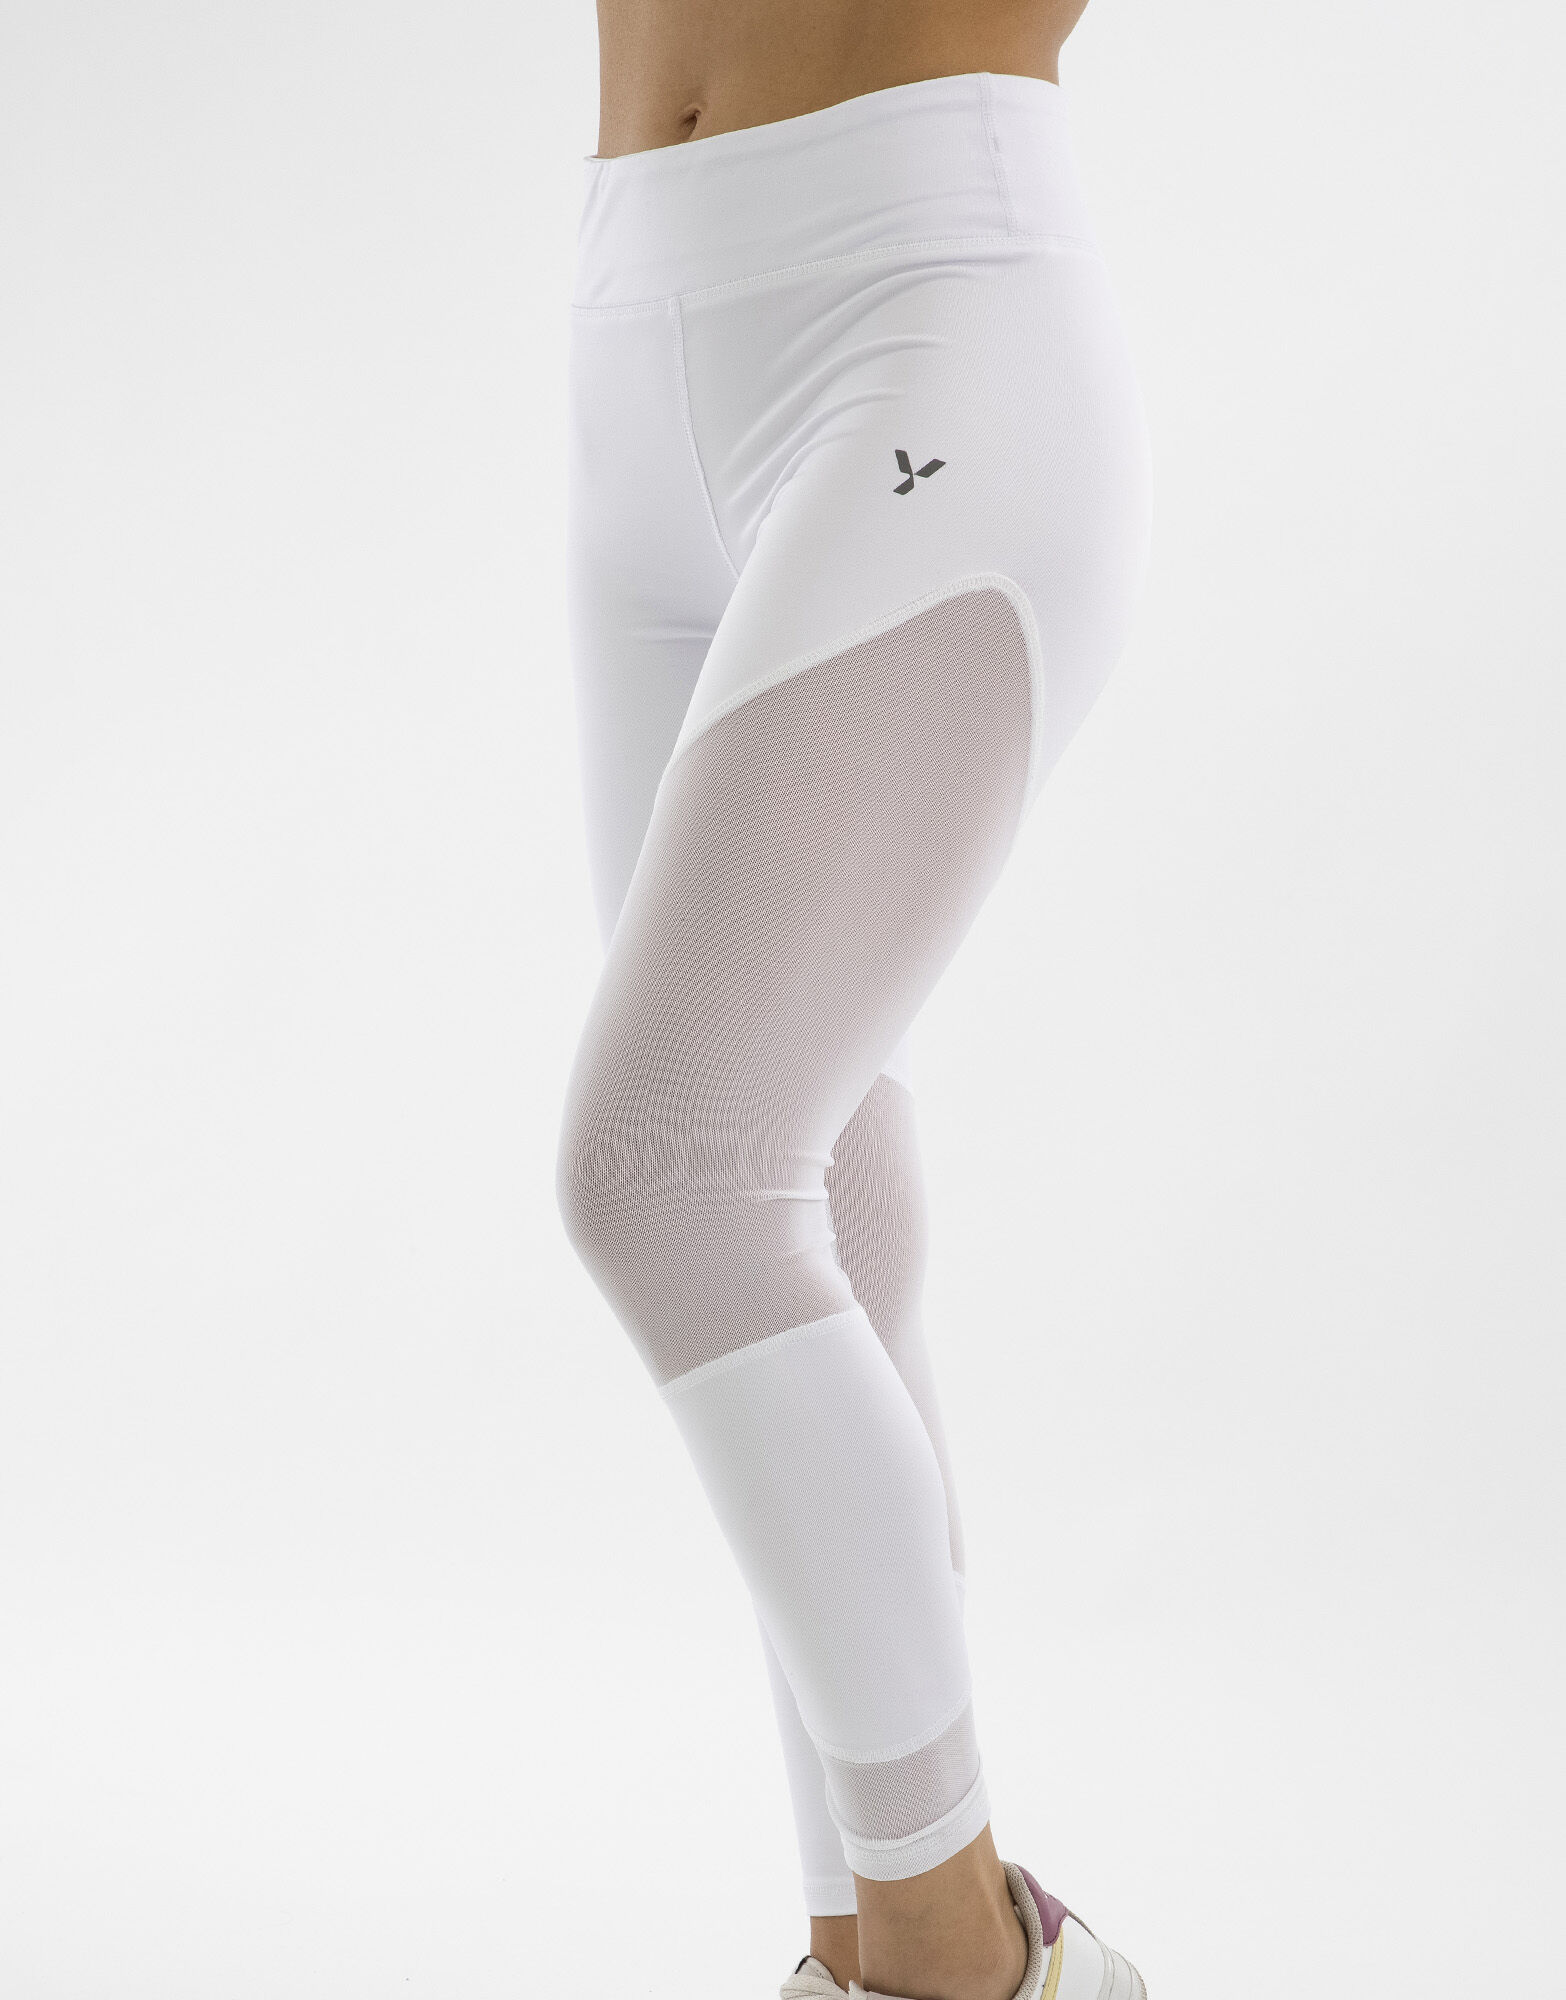 YAMAMOTO OUTFIT Sport Legging Colore: Bianco/bianco M